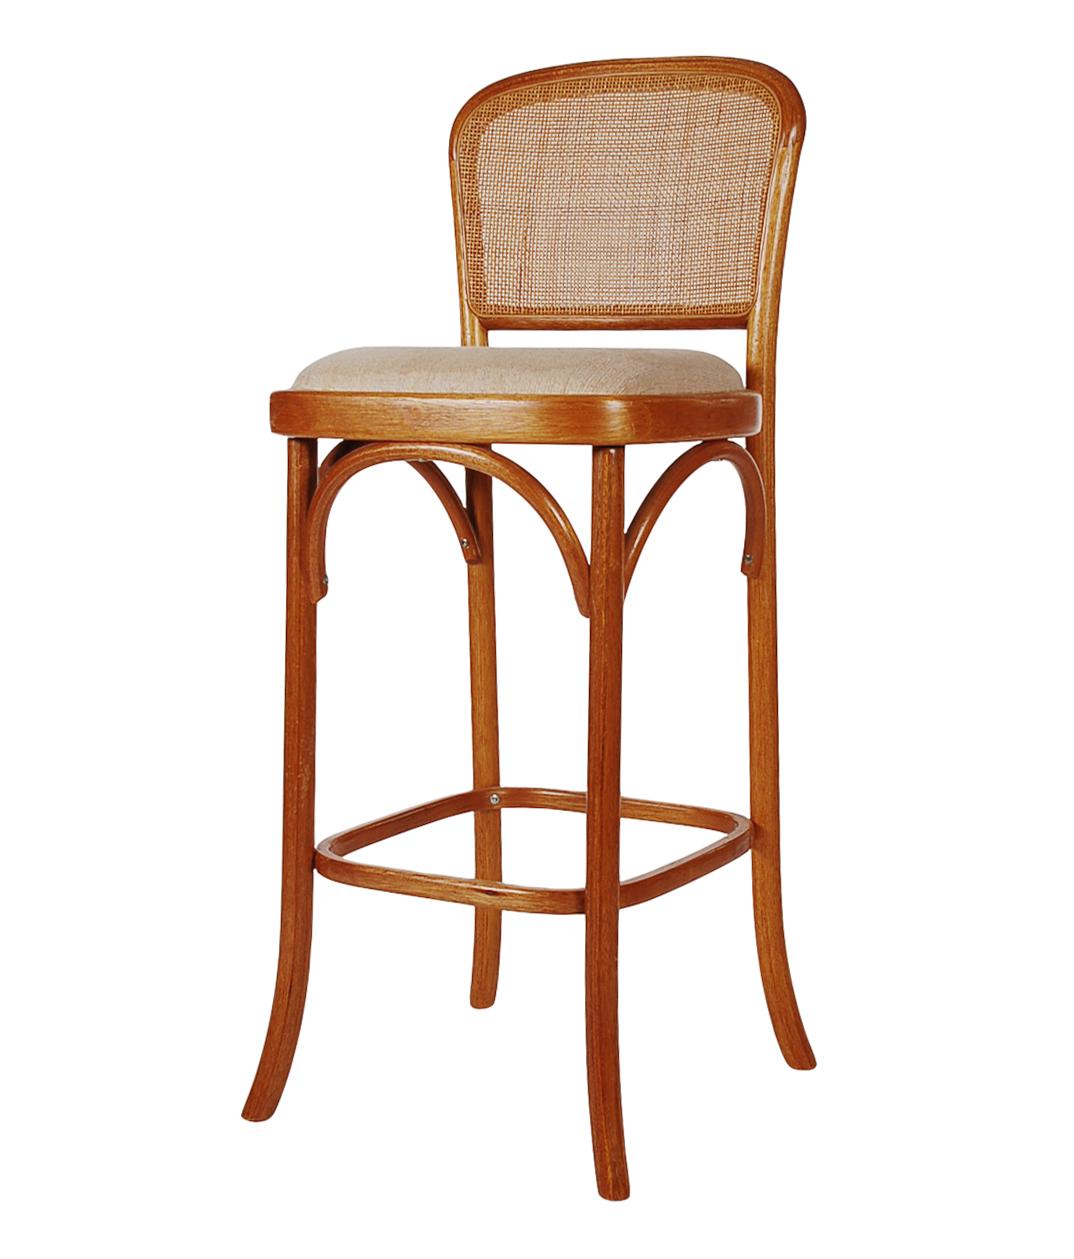 bar stools with cane back